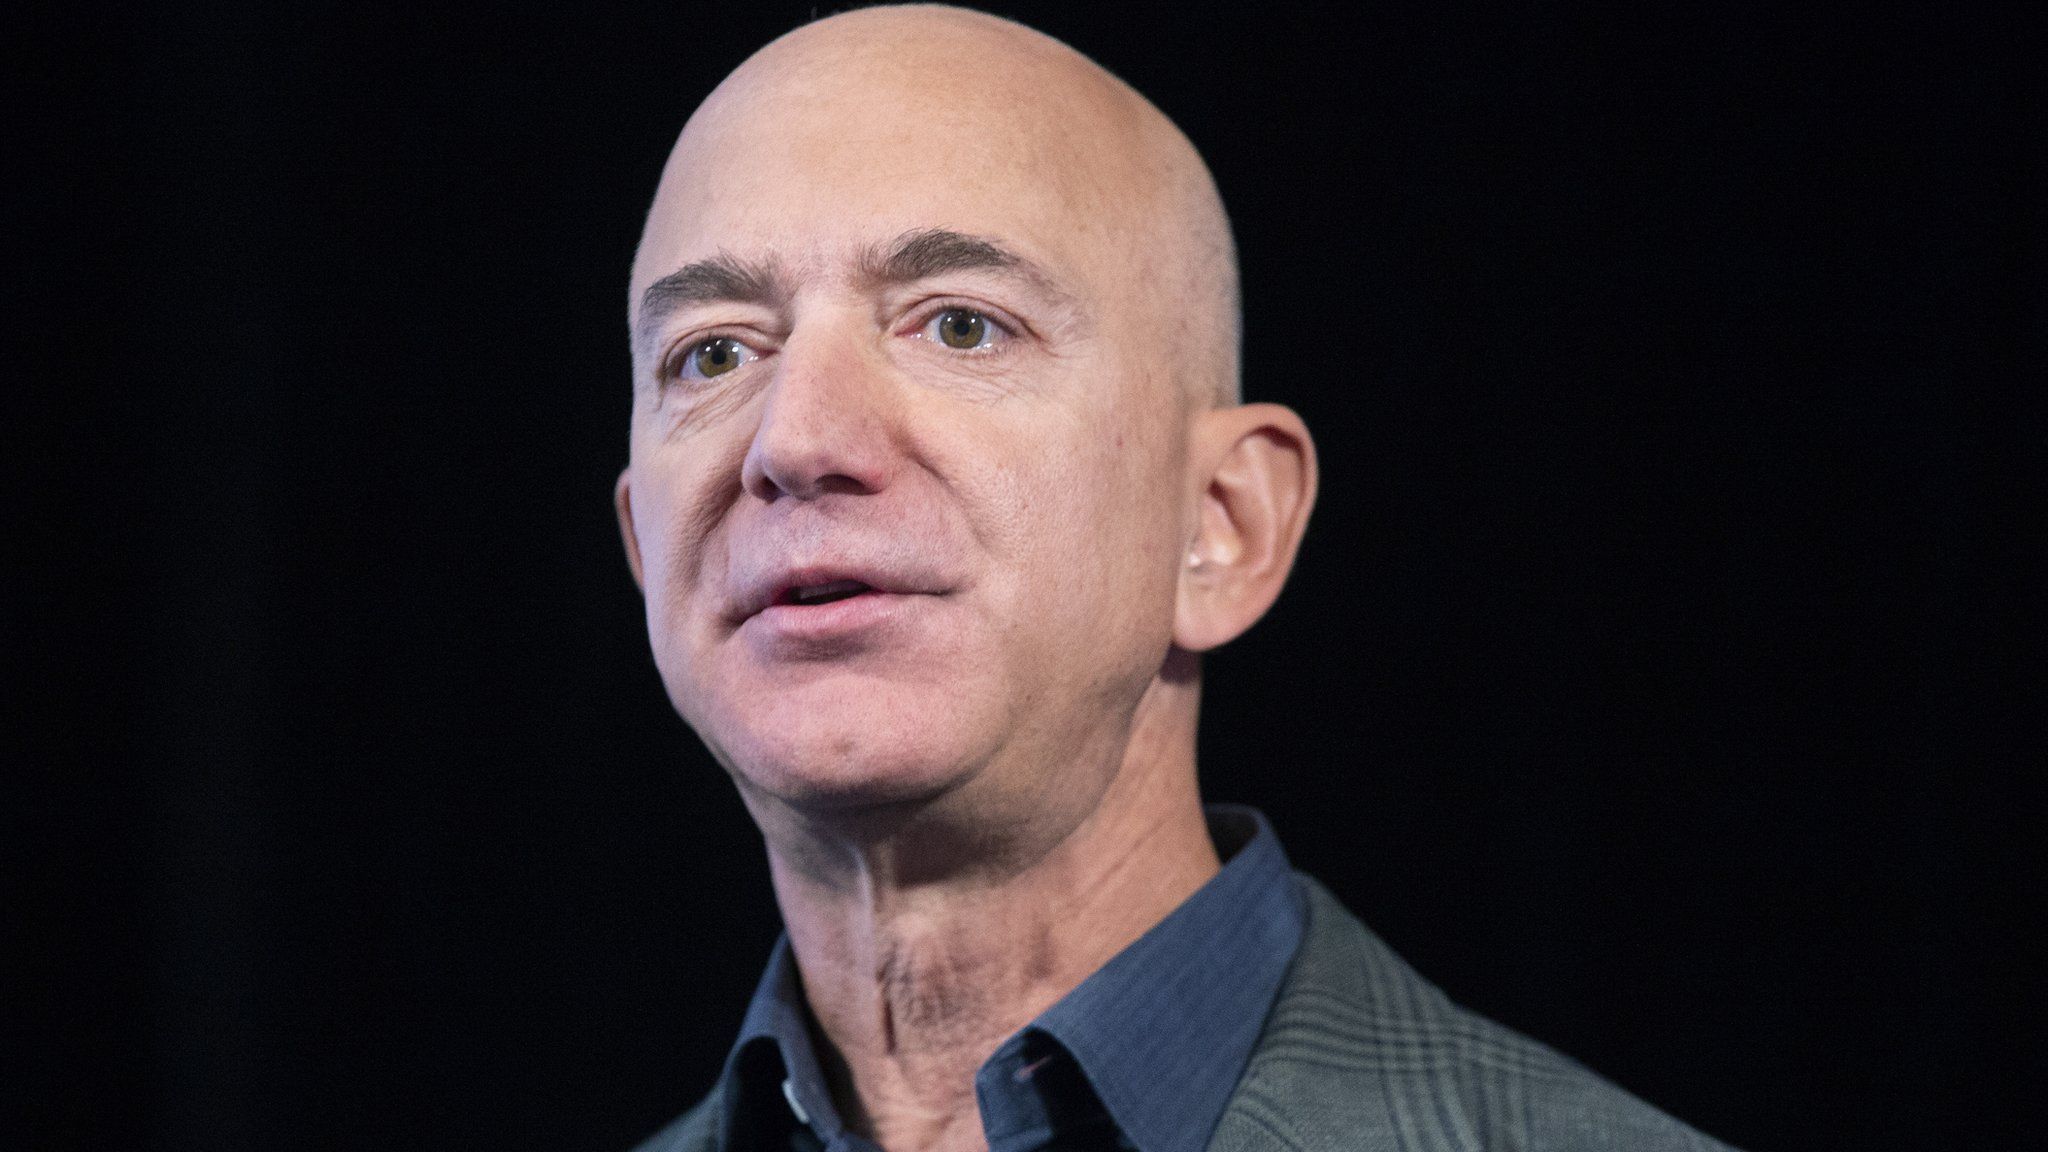 Jeff Bezos in 2019